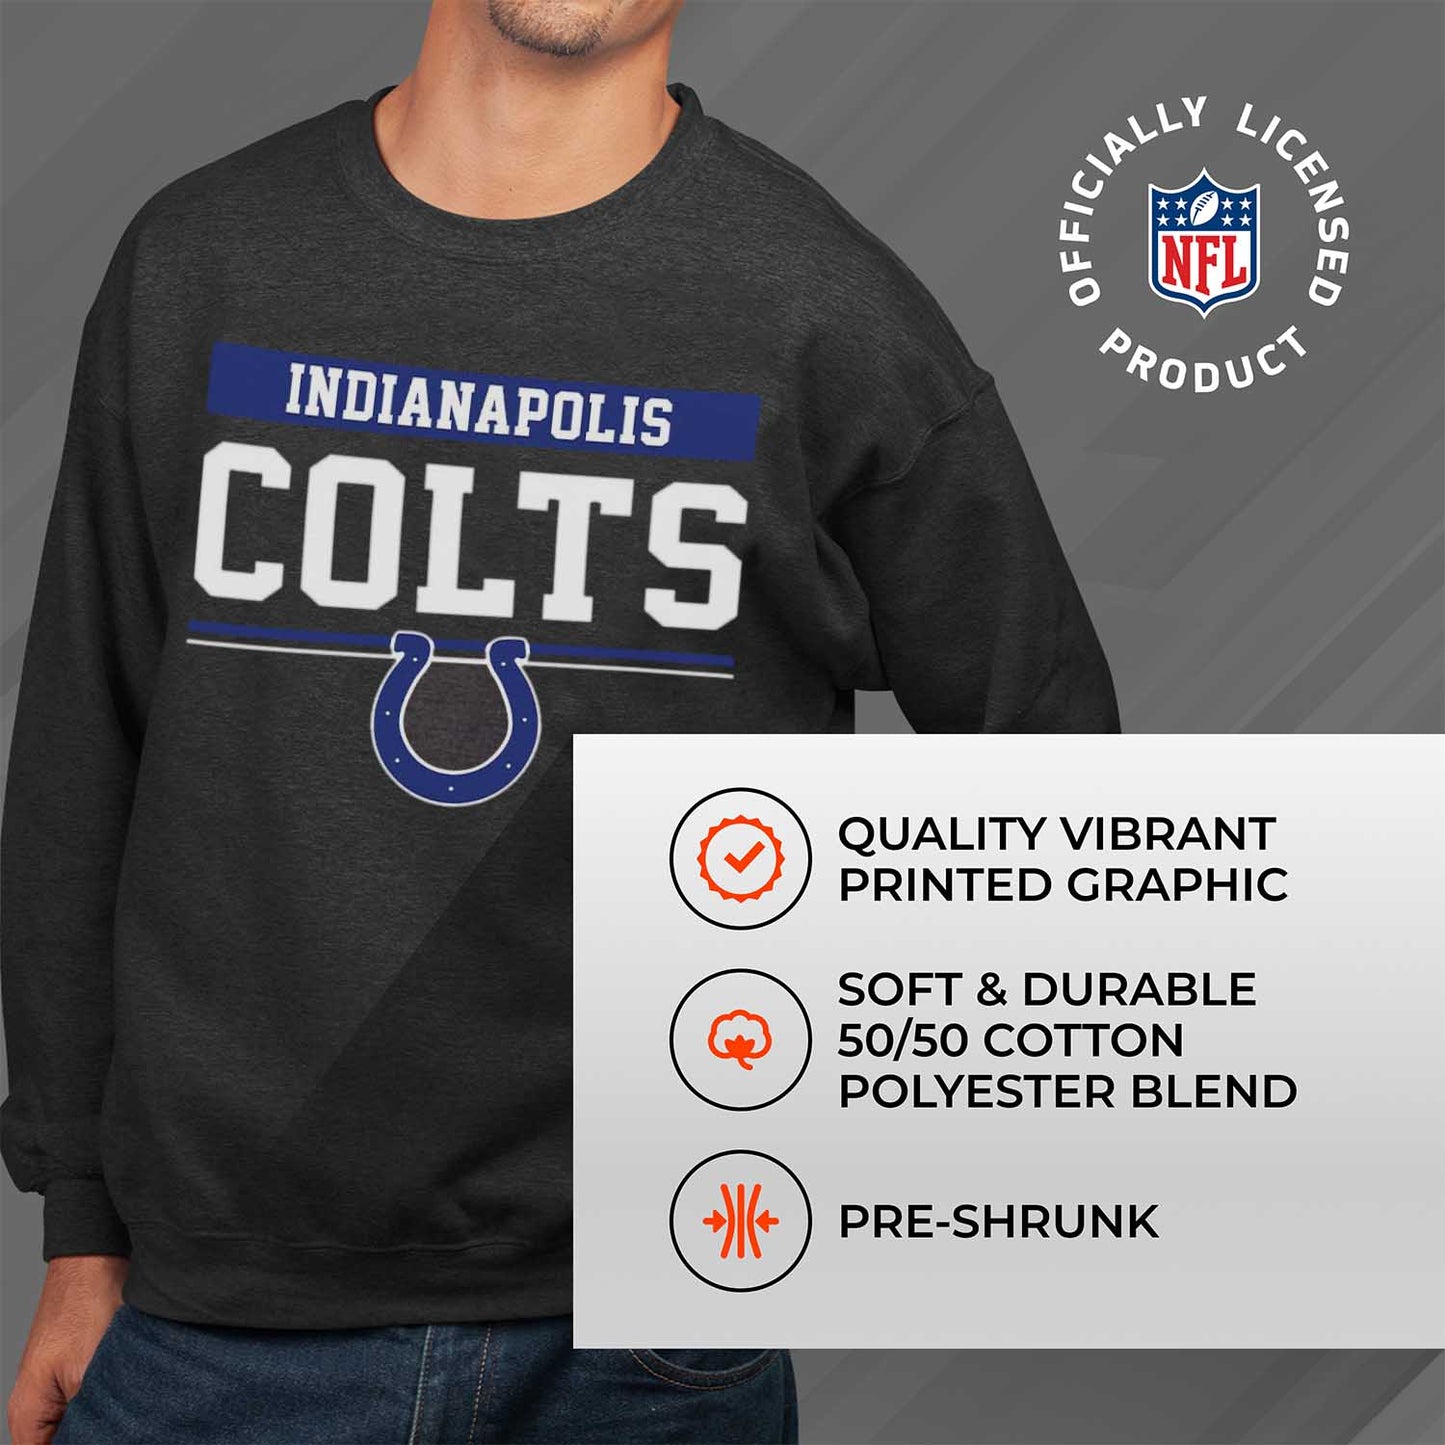 Indianapolis Colts NFL Adult Long Sleeve Team Block Charcoal Crewneck Sweatshirt - Charcoal